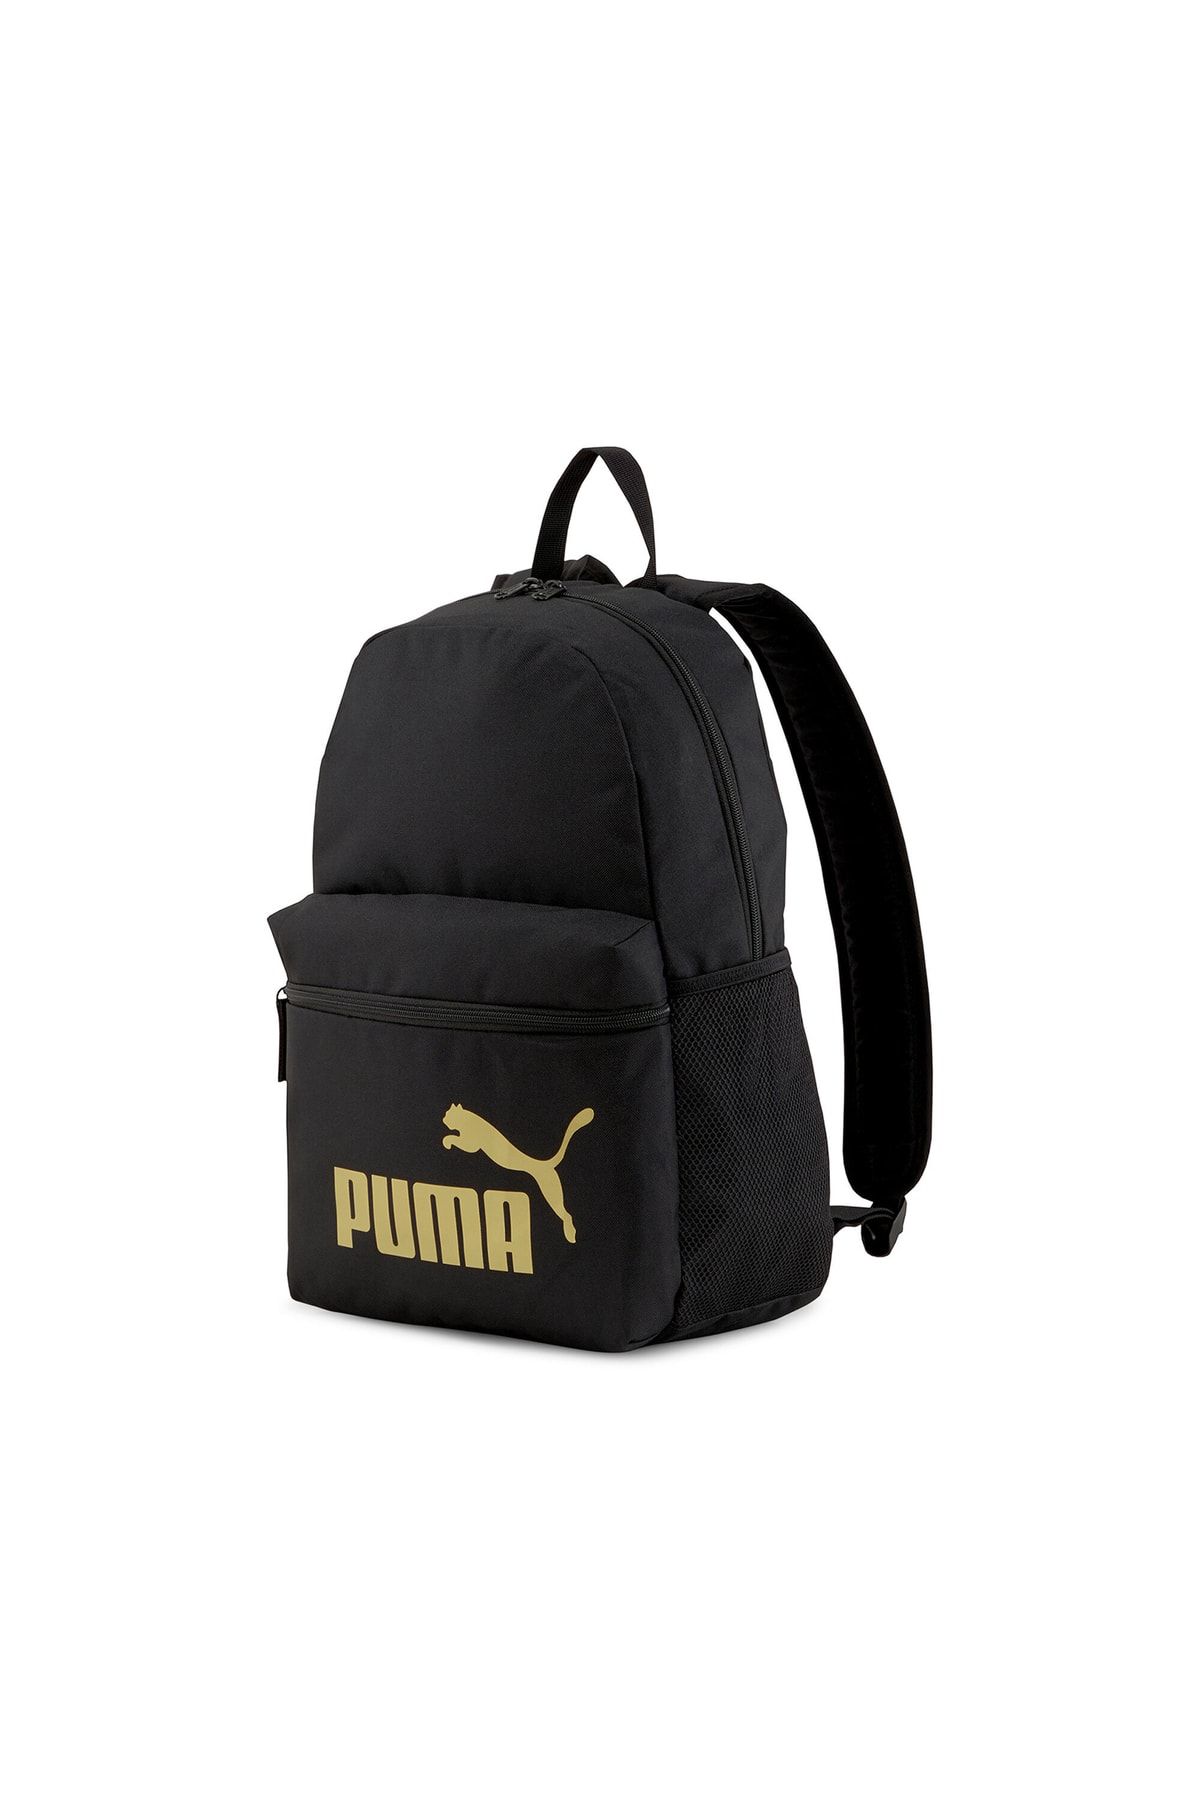 Puma Phase Backpack - Unisex Siyah Sırt Çantası 44x30x14